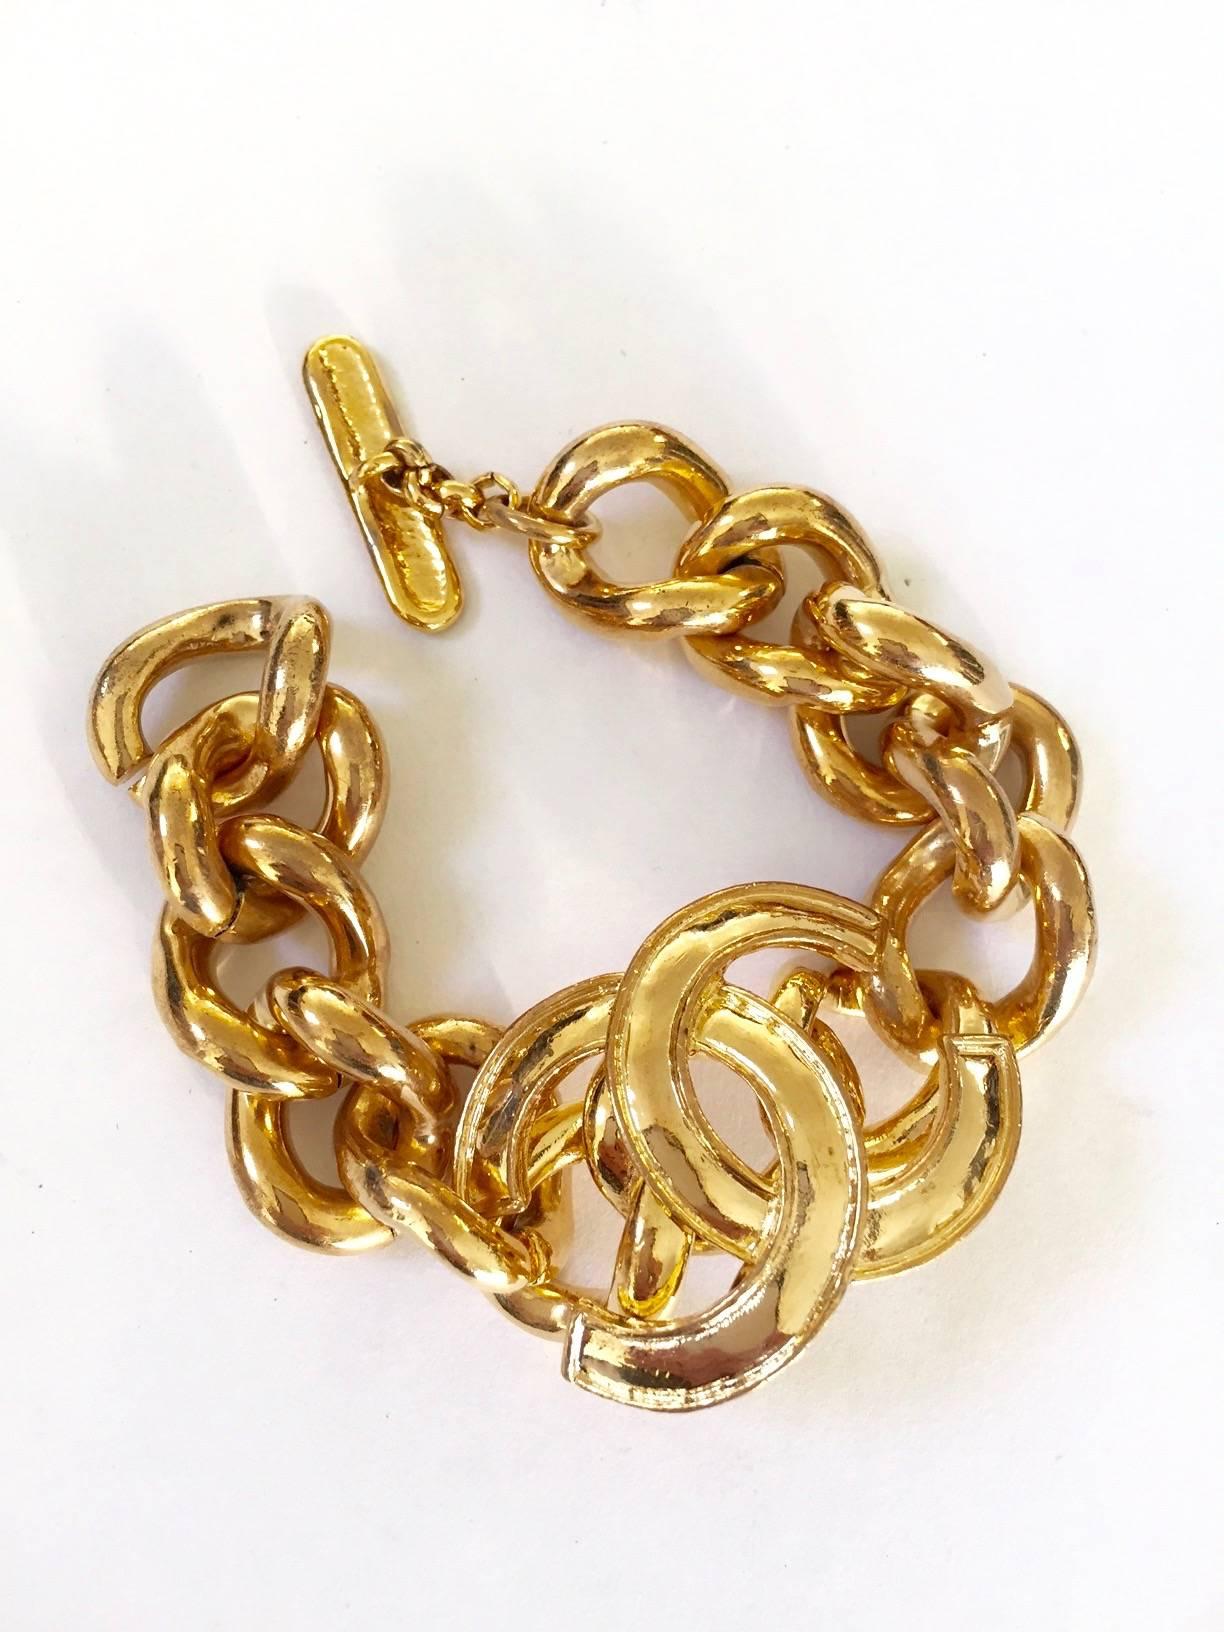 1980s CHANEL gold pleated chain bracelet.
6 3/8 Inner diameter
3/4 Width links
1 1/2 W X 1 1/4 H 